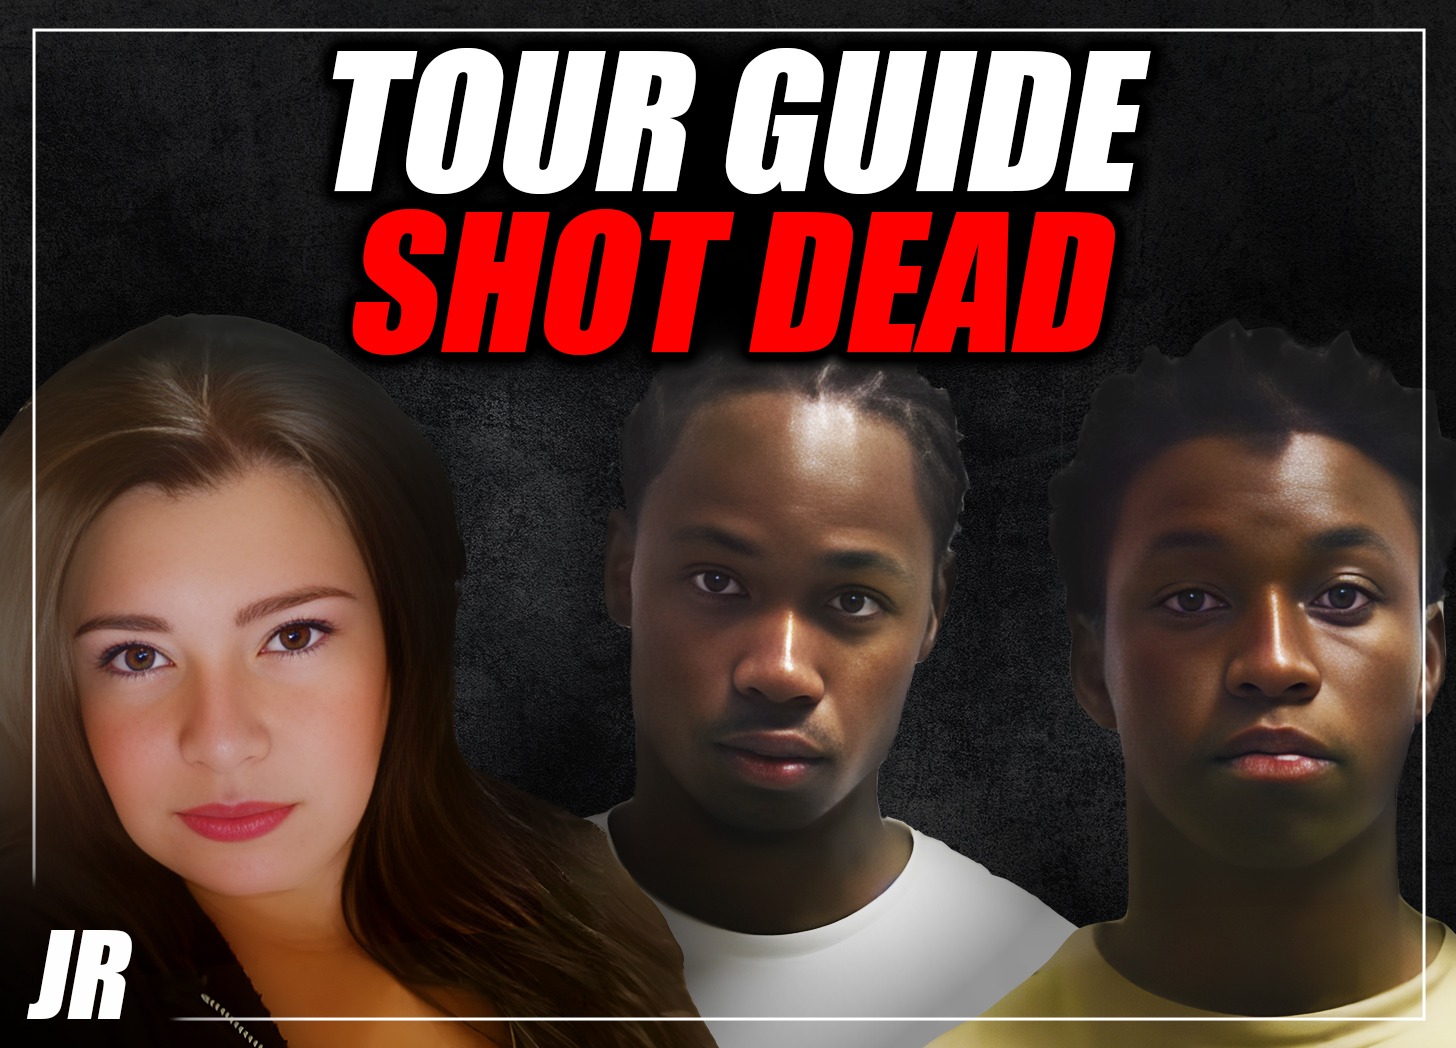 Three Black teens arrested for gunshot murder of New Orleans tour guide